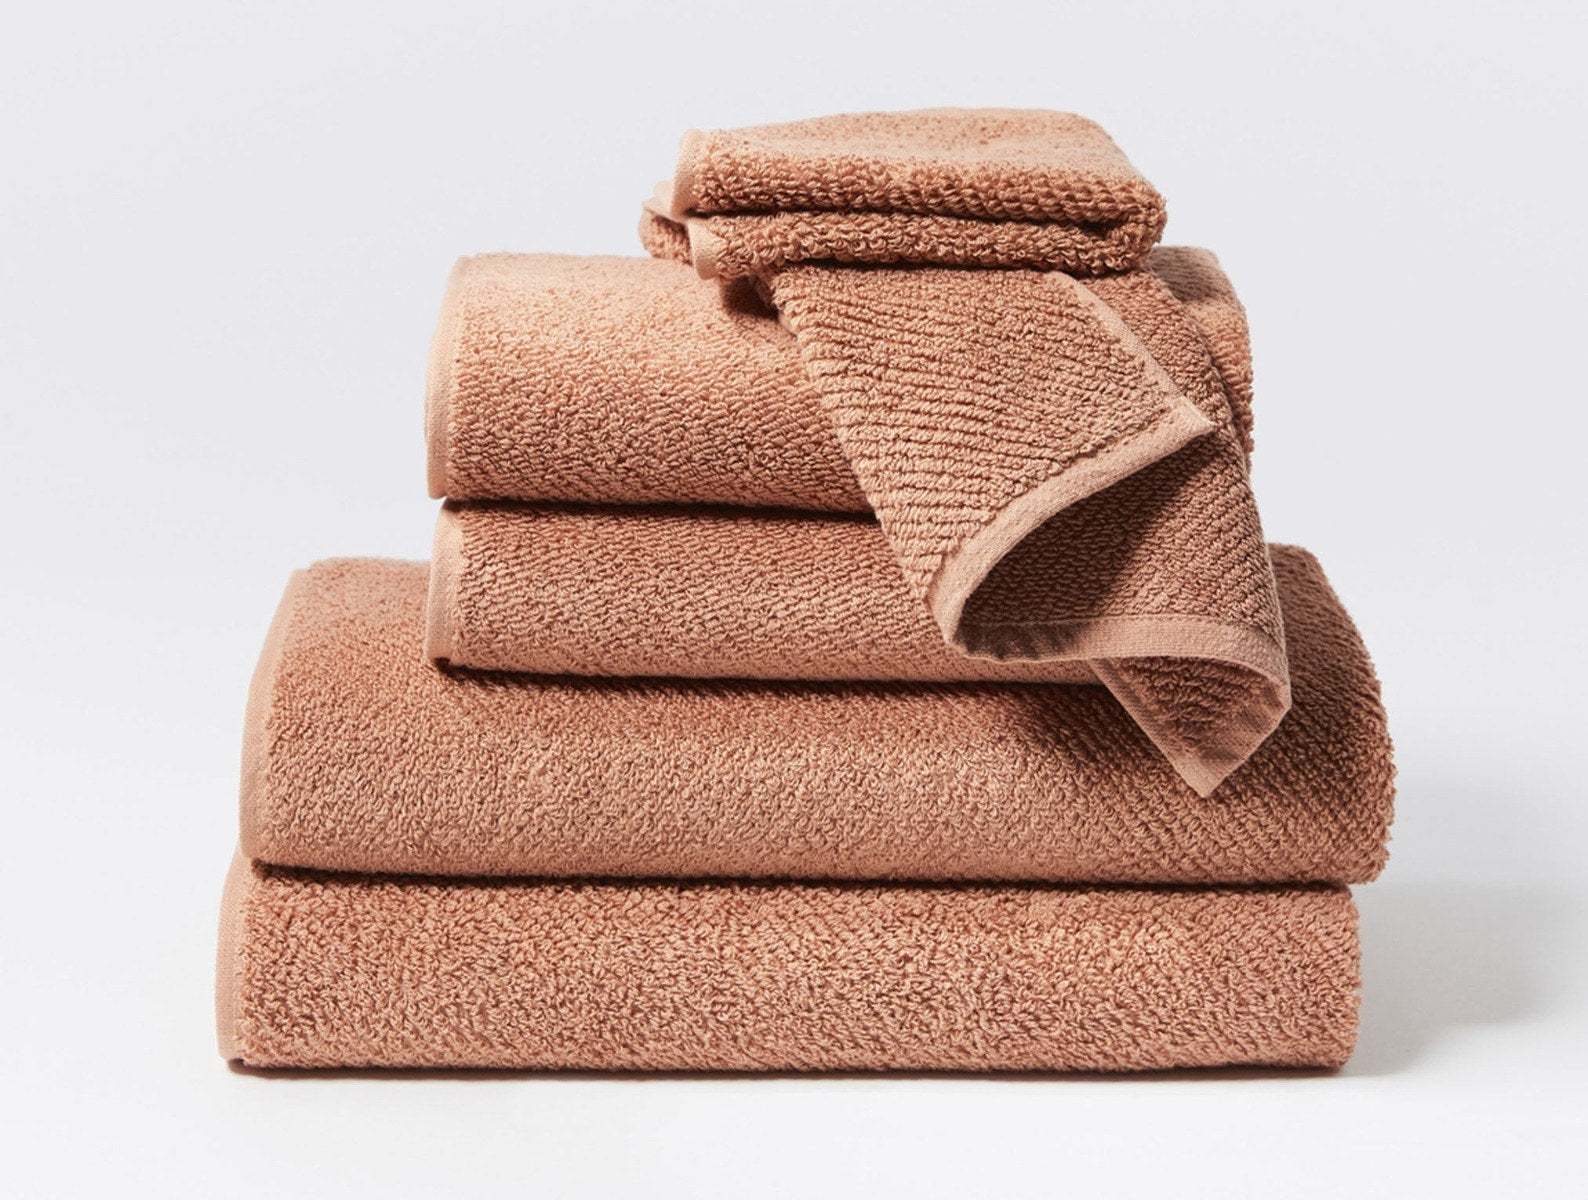  YTYC Towels,29x59 Inch Extra Large Bath Towels Sets